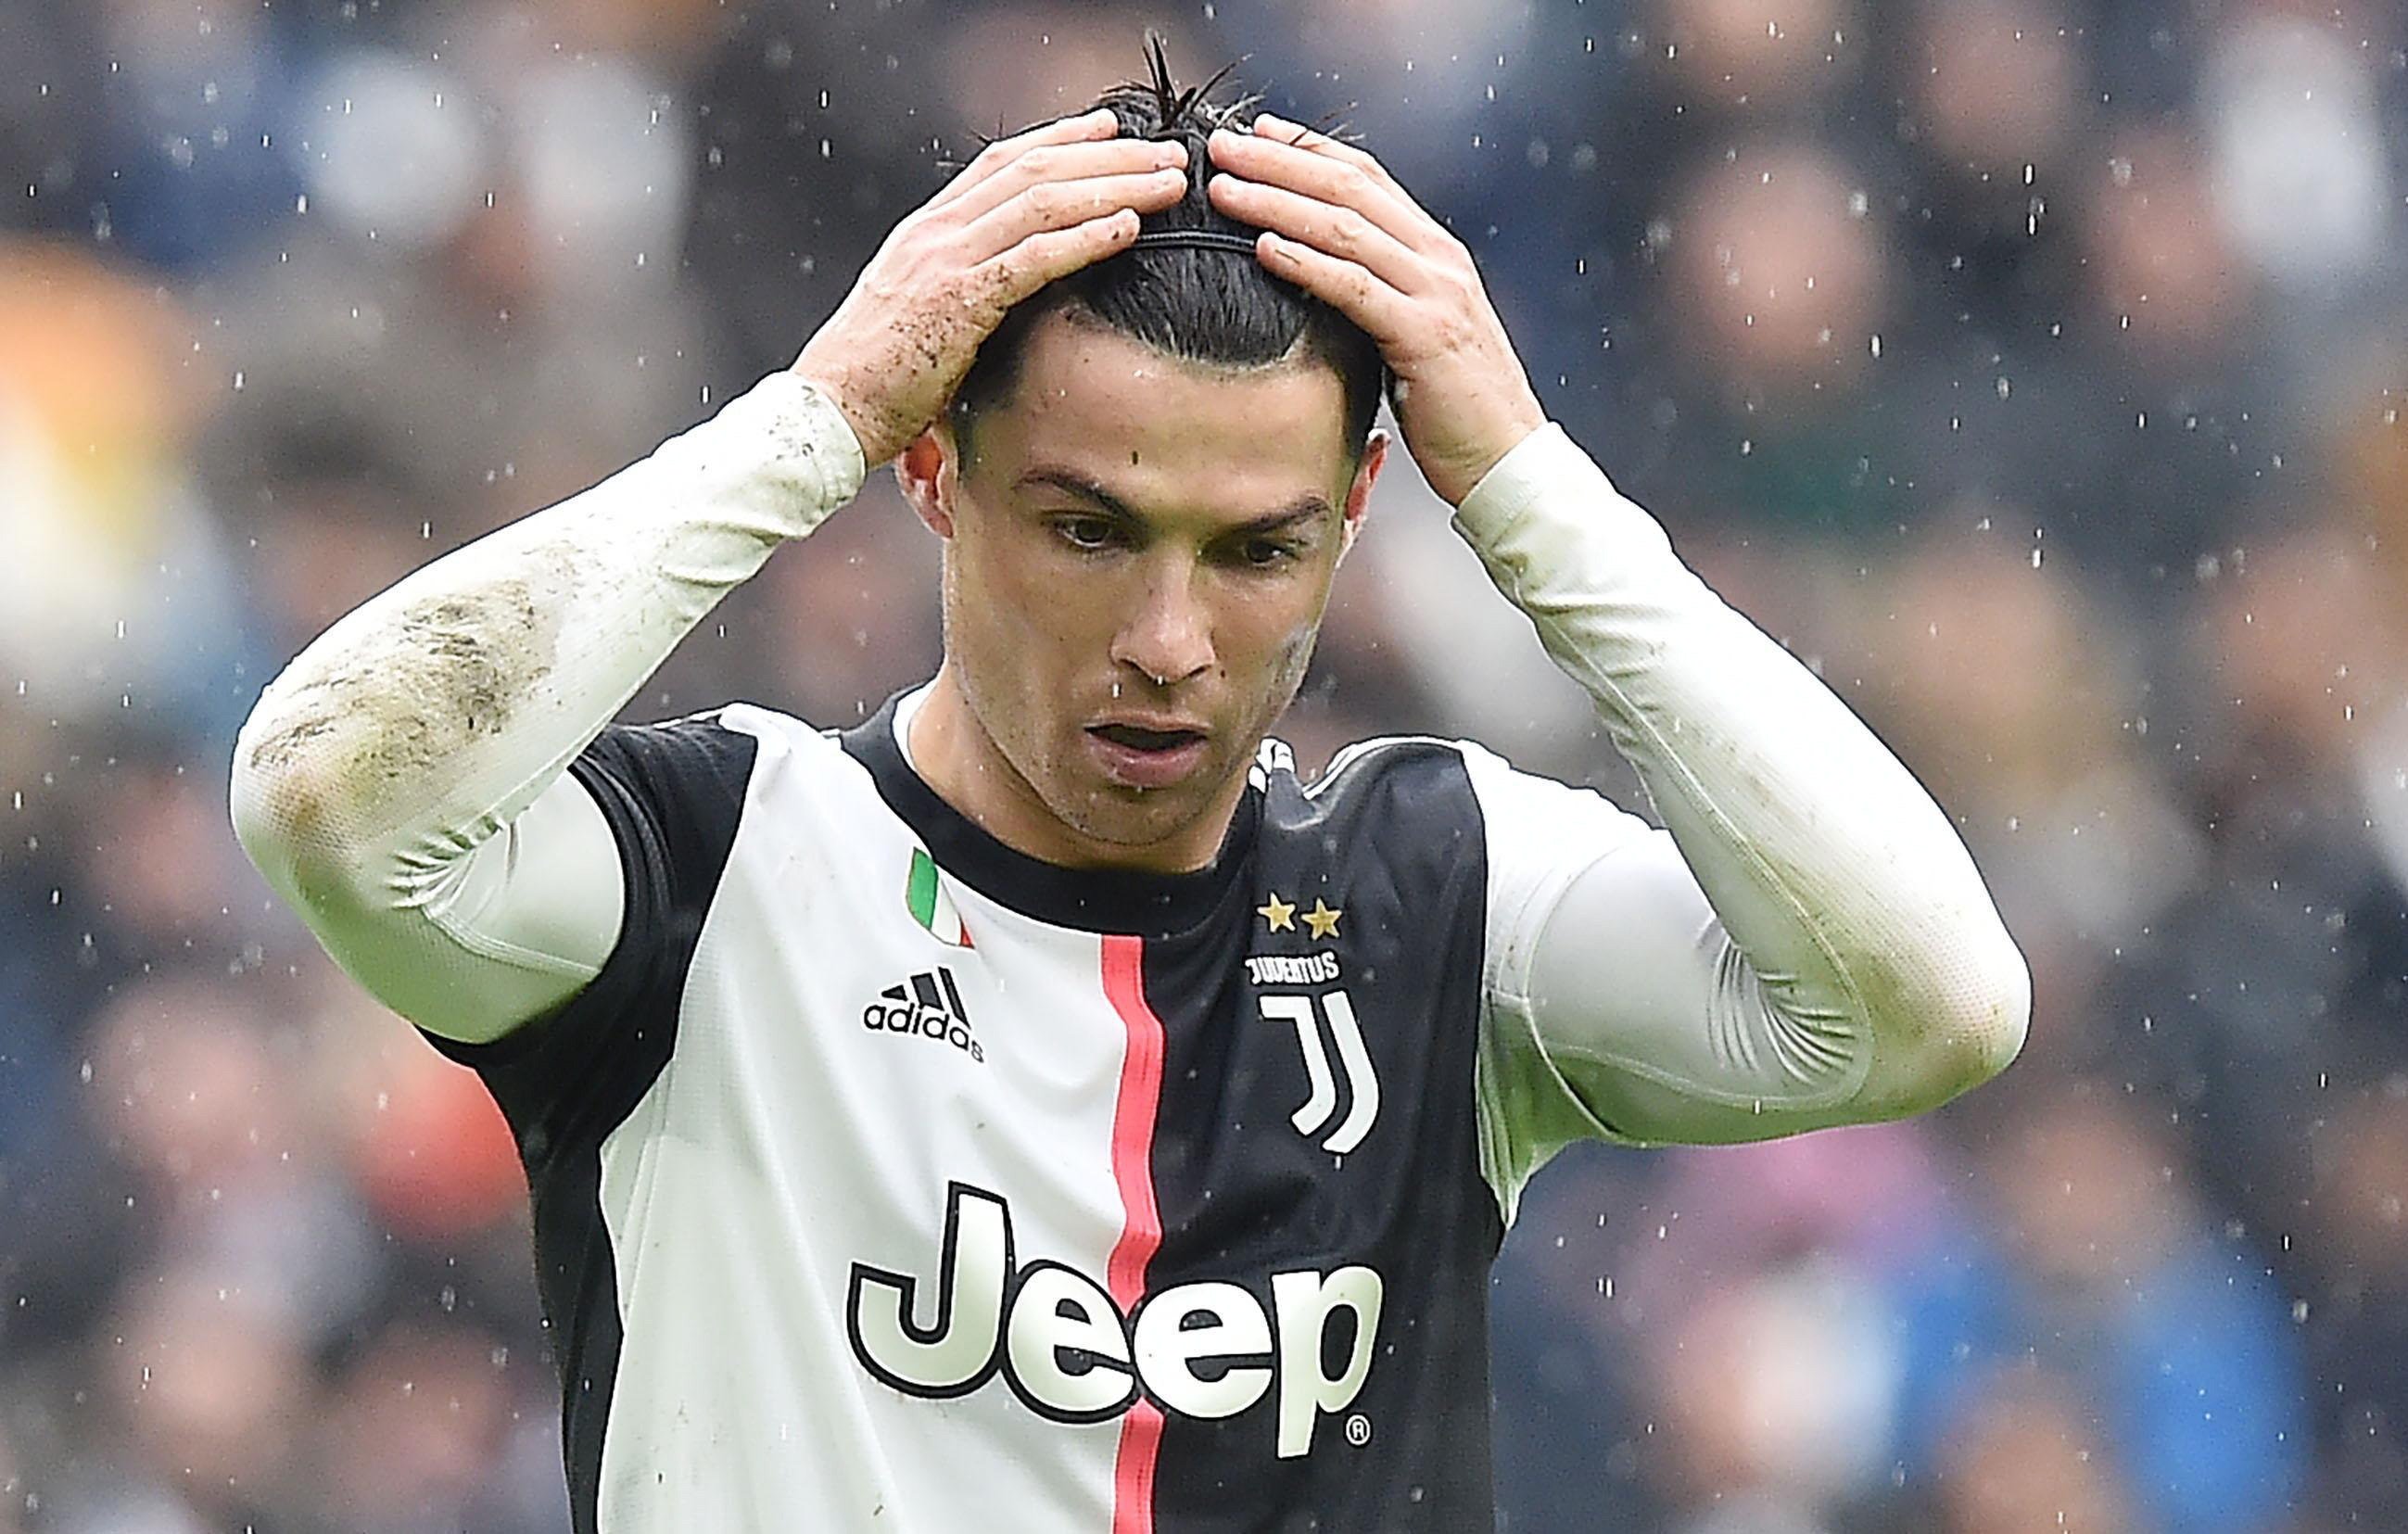 Problema majúscul a Itàlia: 8 clubs no volen acabar la Serie A